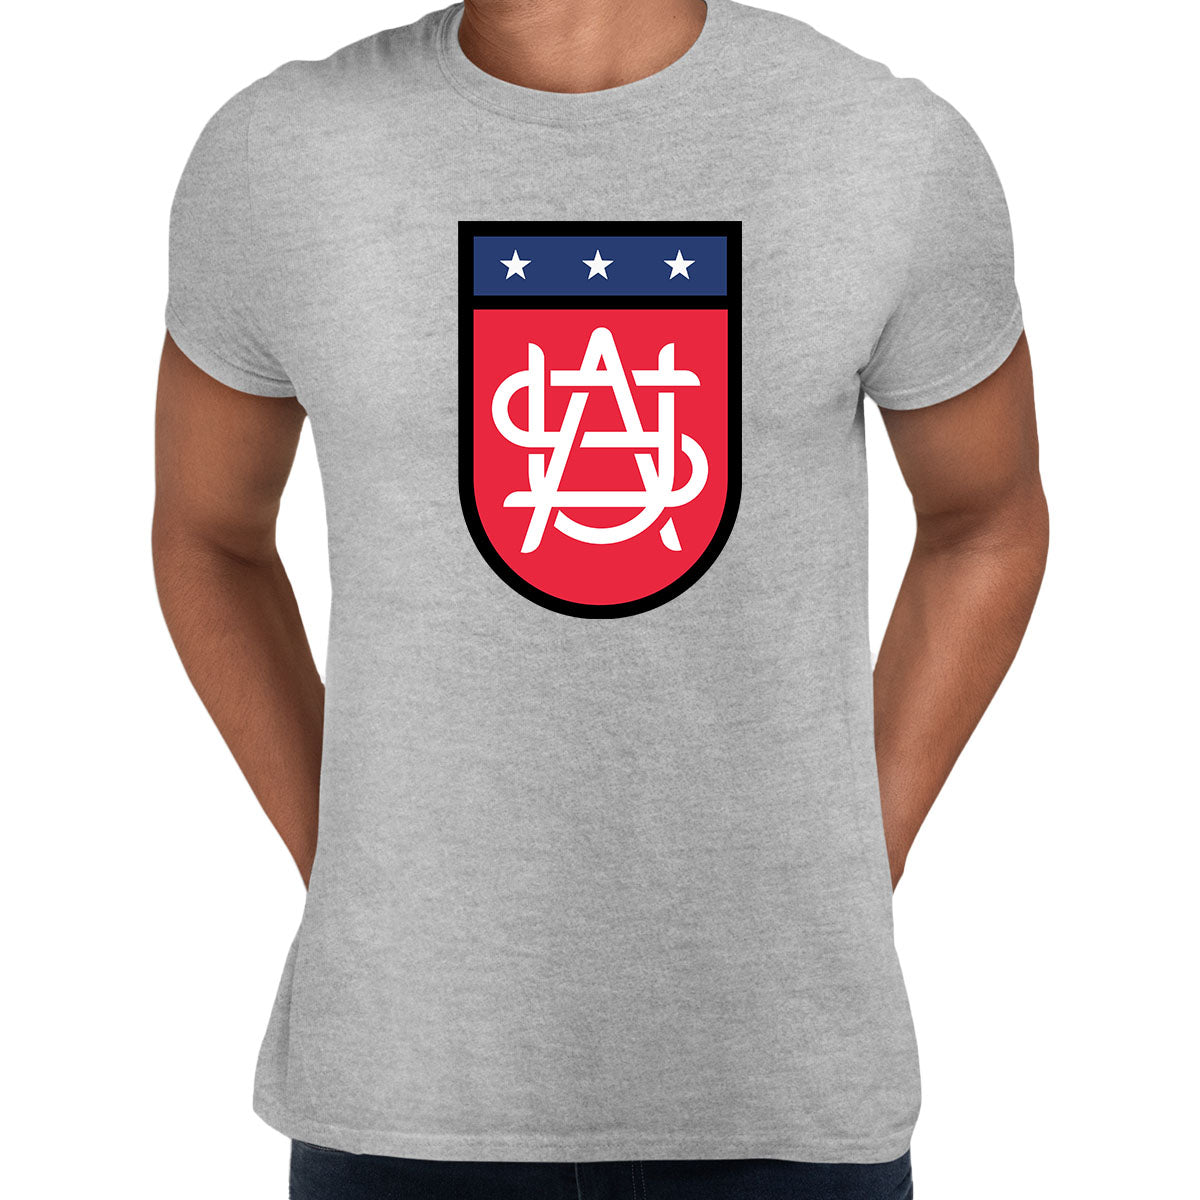 The USA Tee - Wear it with pride Classic baseball gift idea Adult Unisex T-Shirt - Kuzi Tees